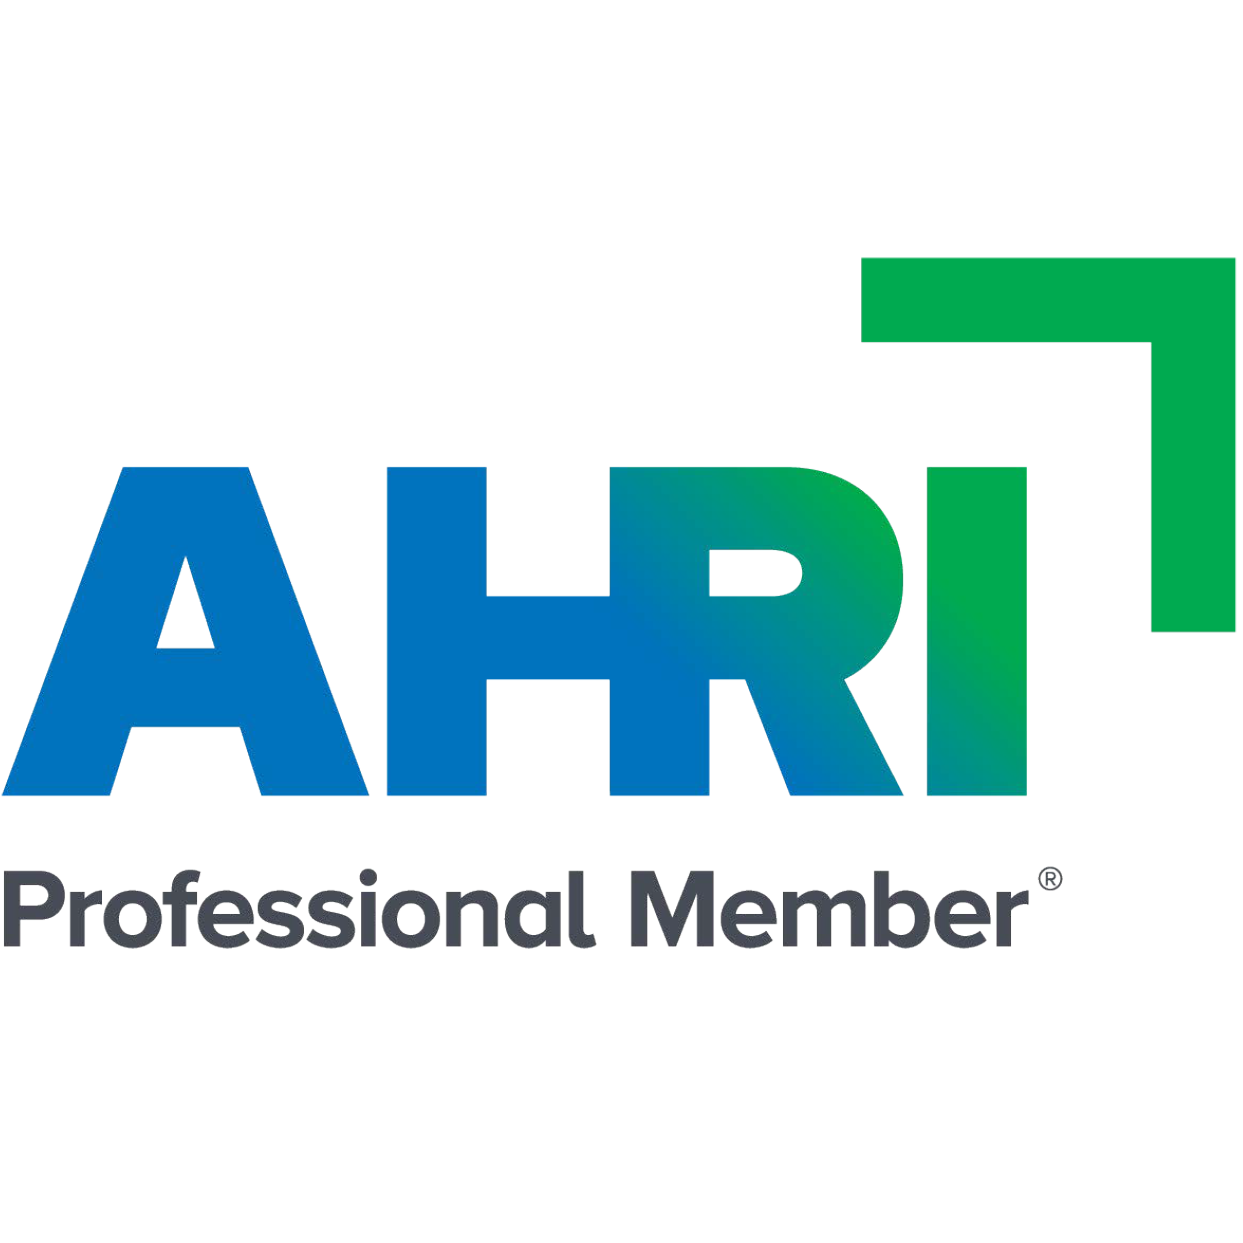 Australian HR Industry Professional Member